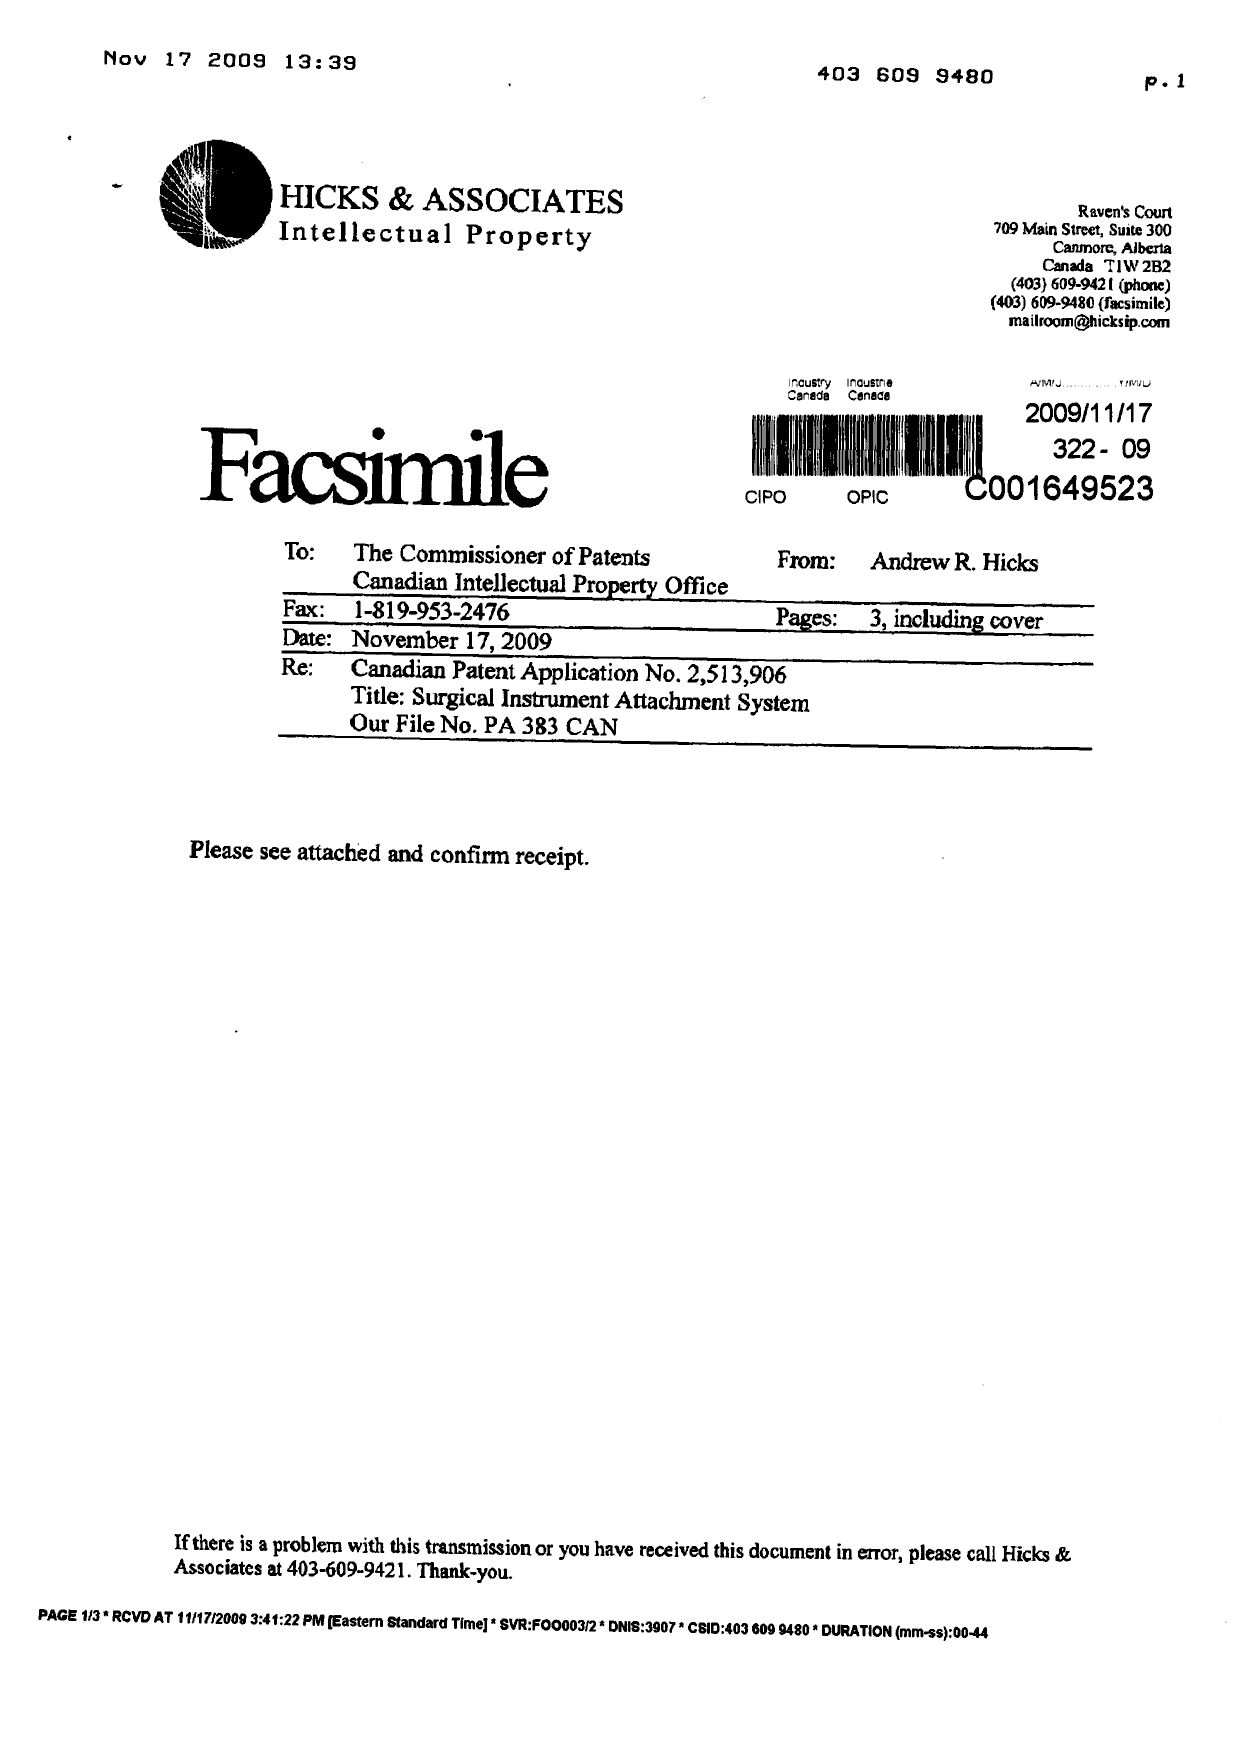 Canadian Patent Document 2513906. Correspondence 20081217. Image 2 of 2